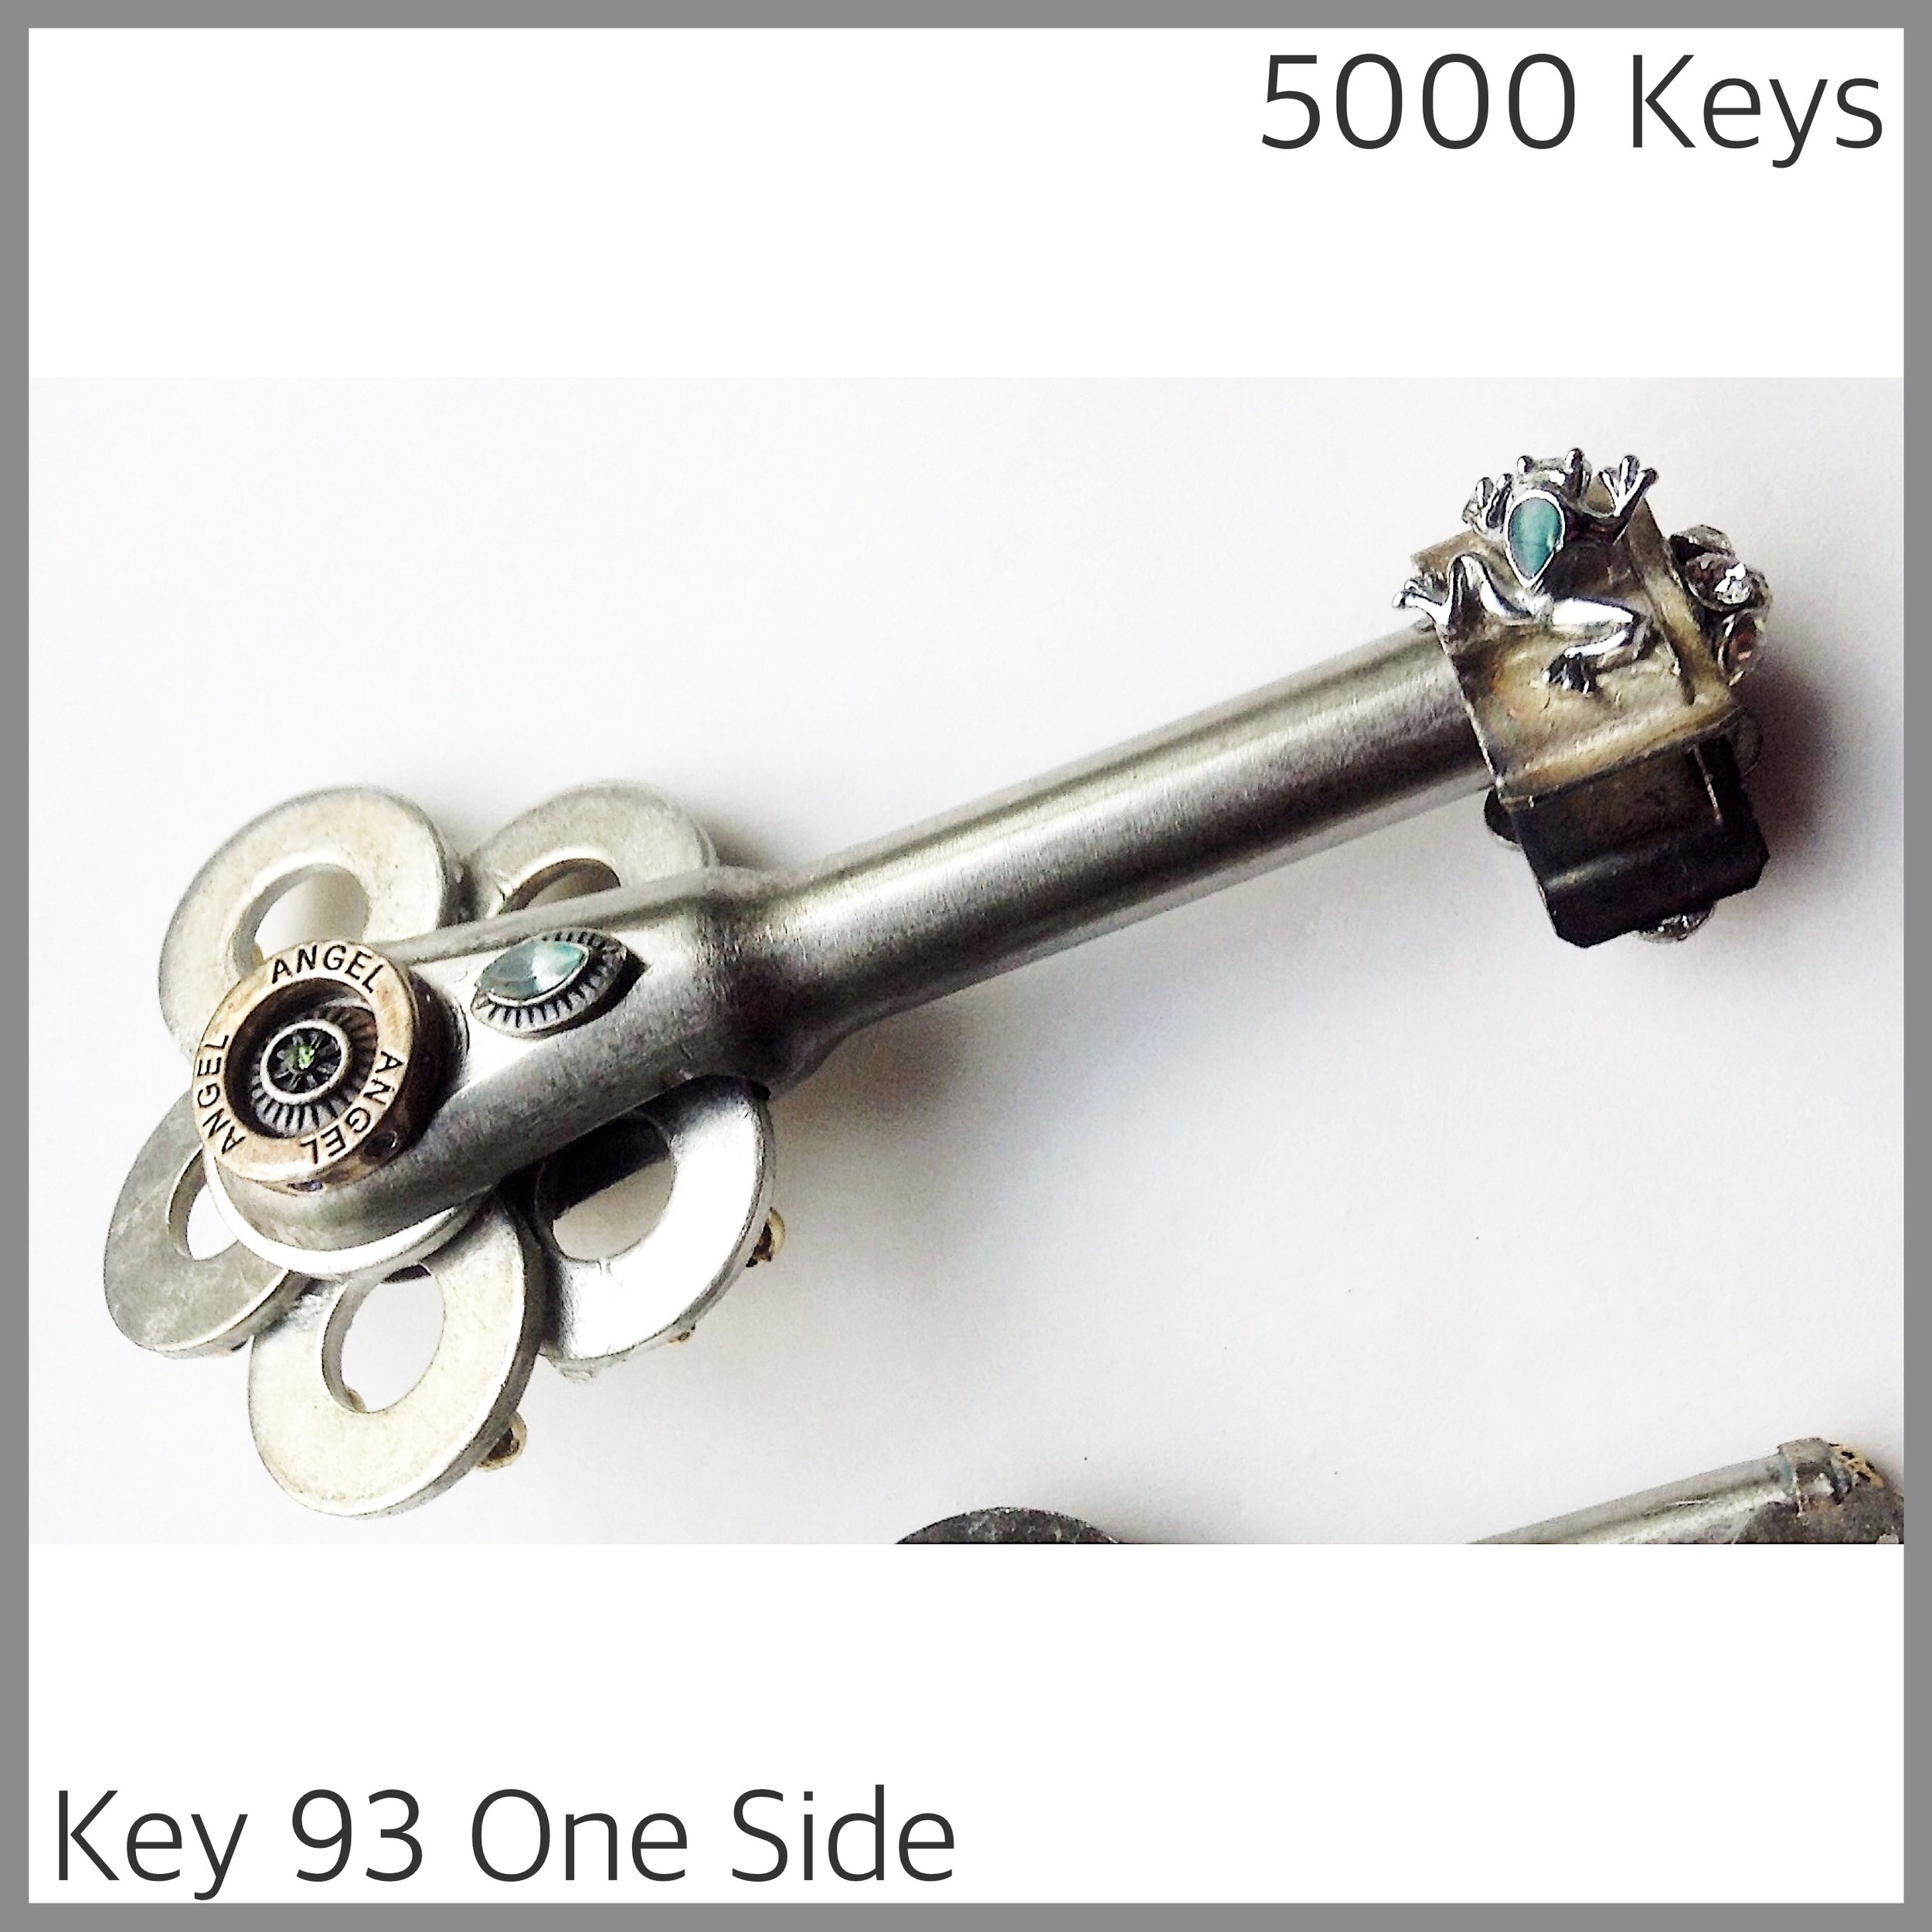 Key 93 one side.JPG